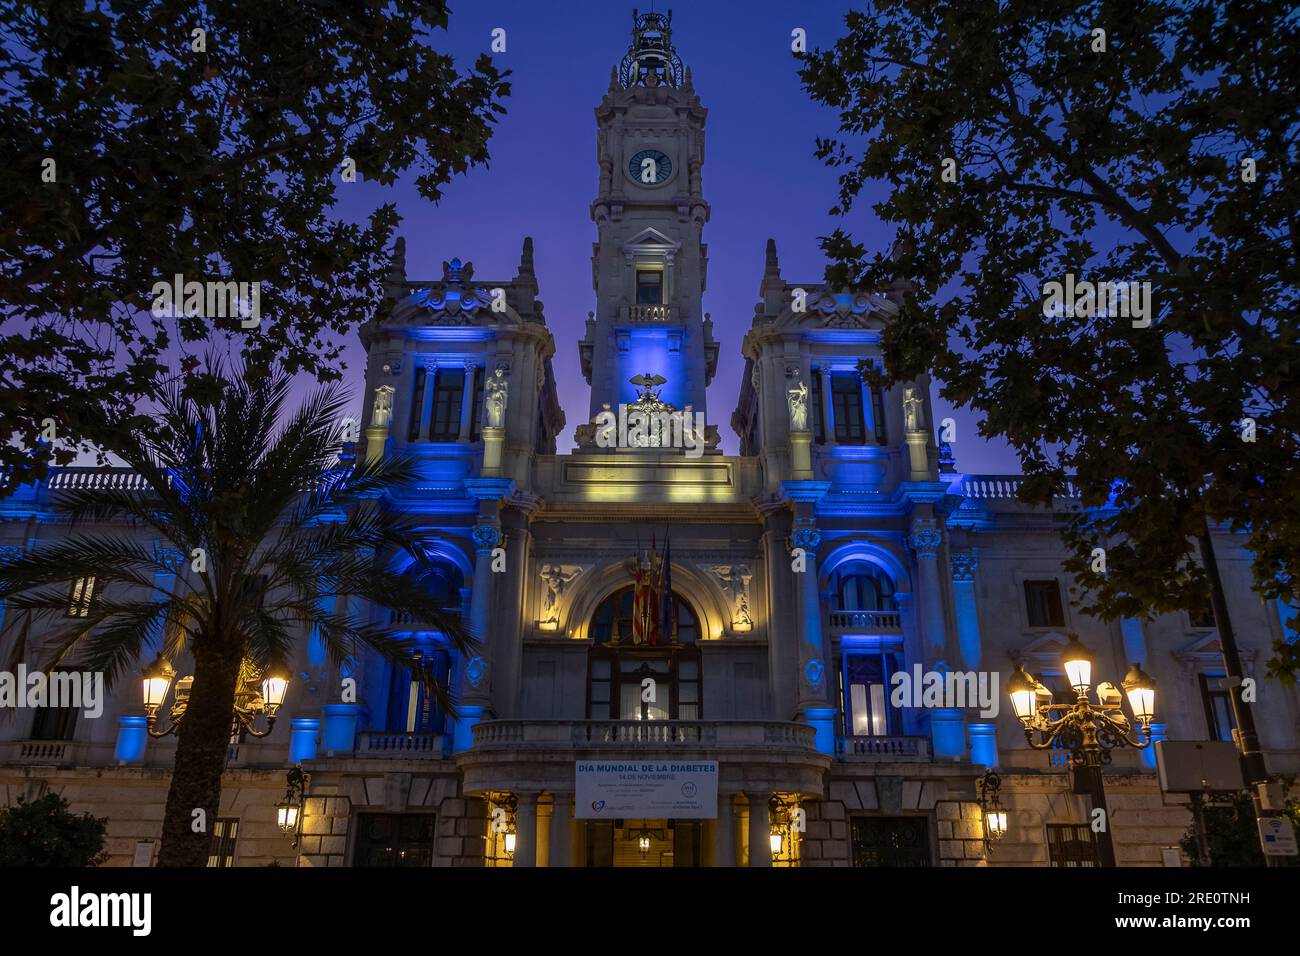 Das Rathaus von Valencia nachts mit Beleuchtung *** Valencia City Hall at night with lighting Stock Photo